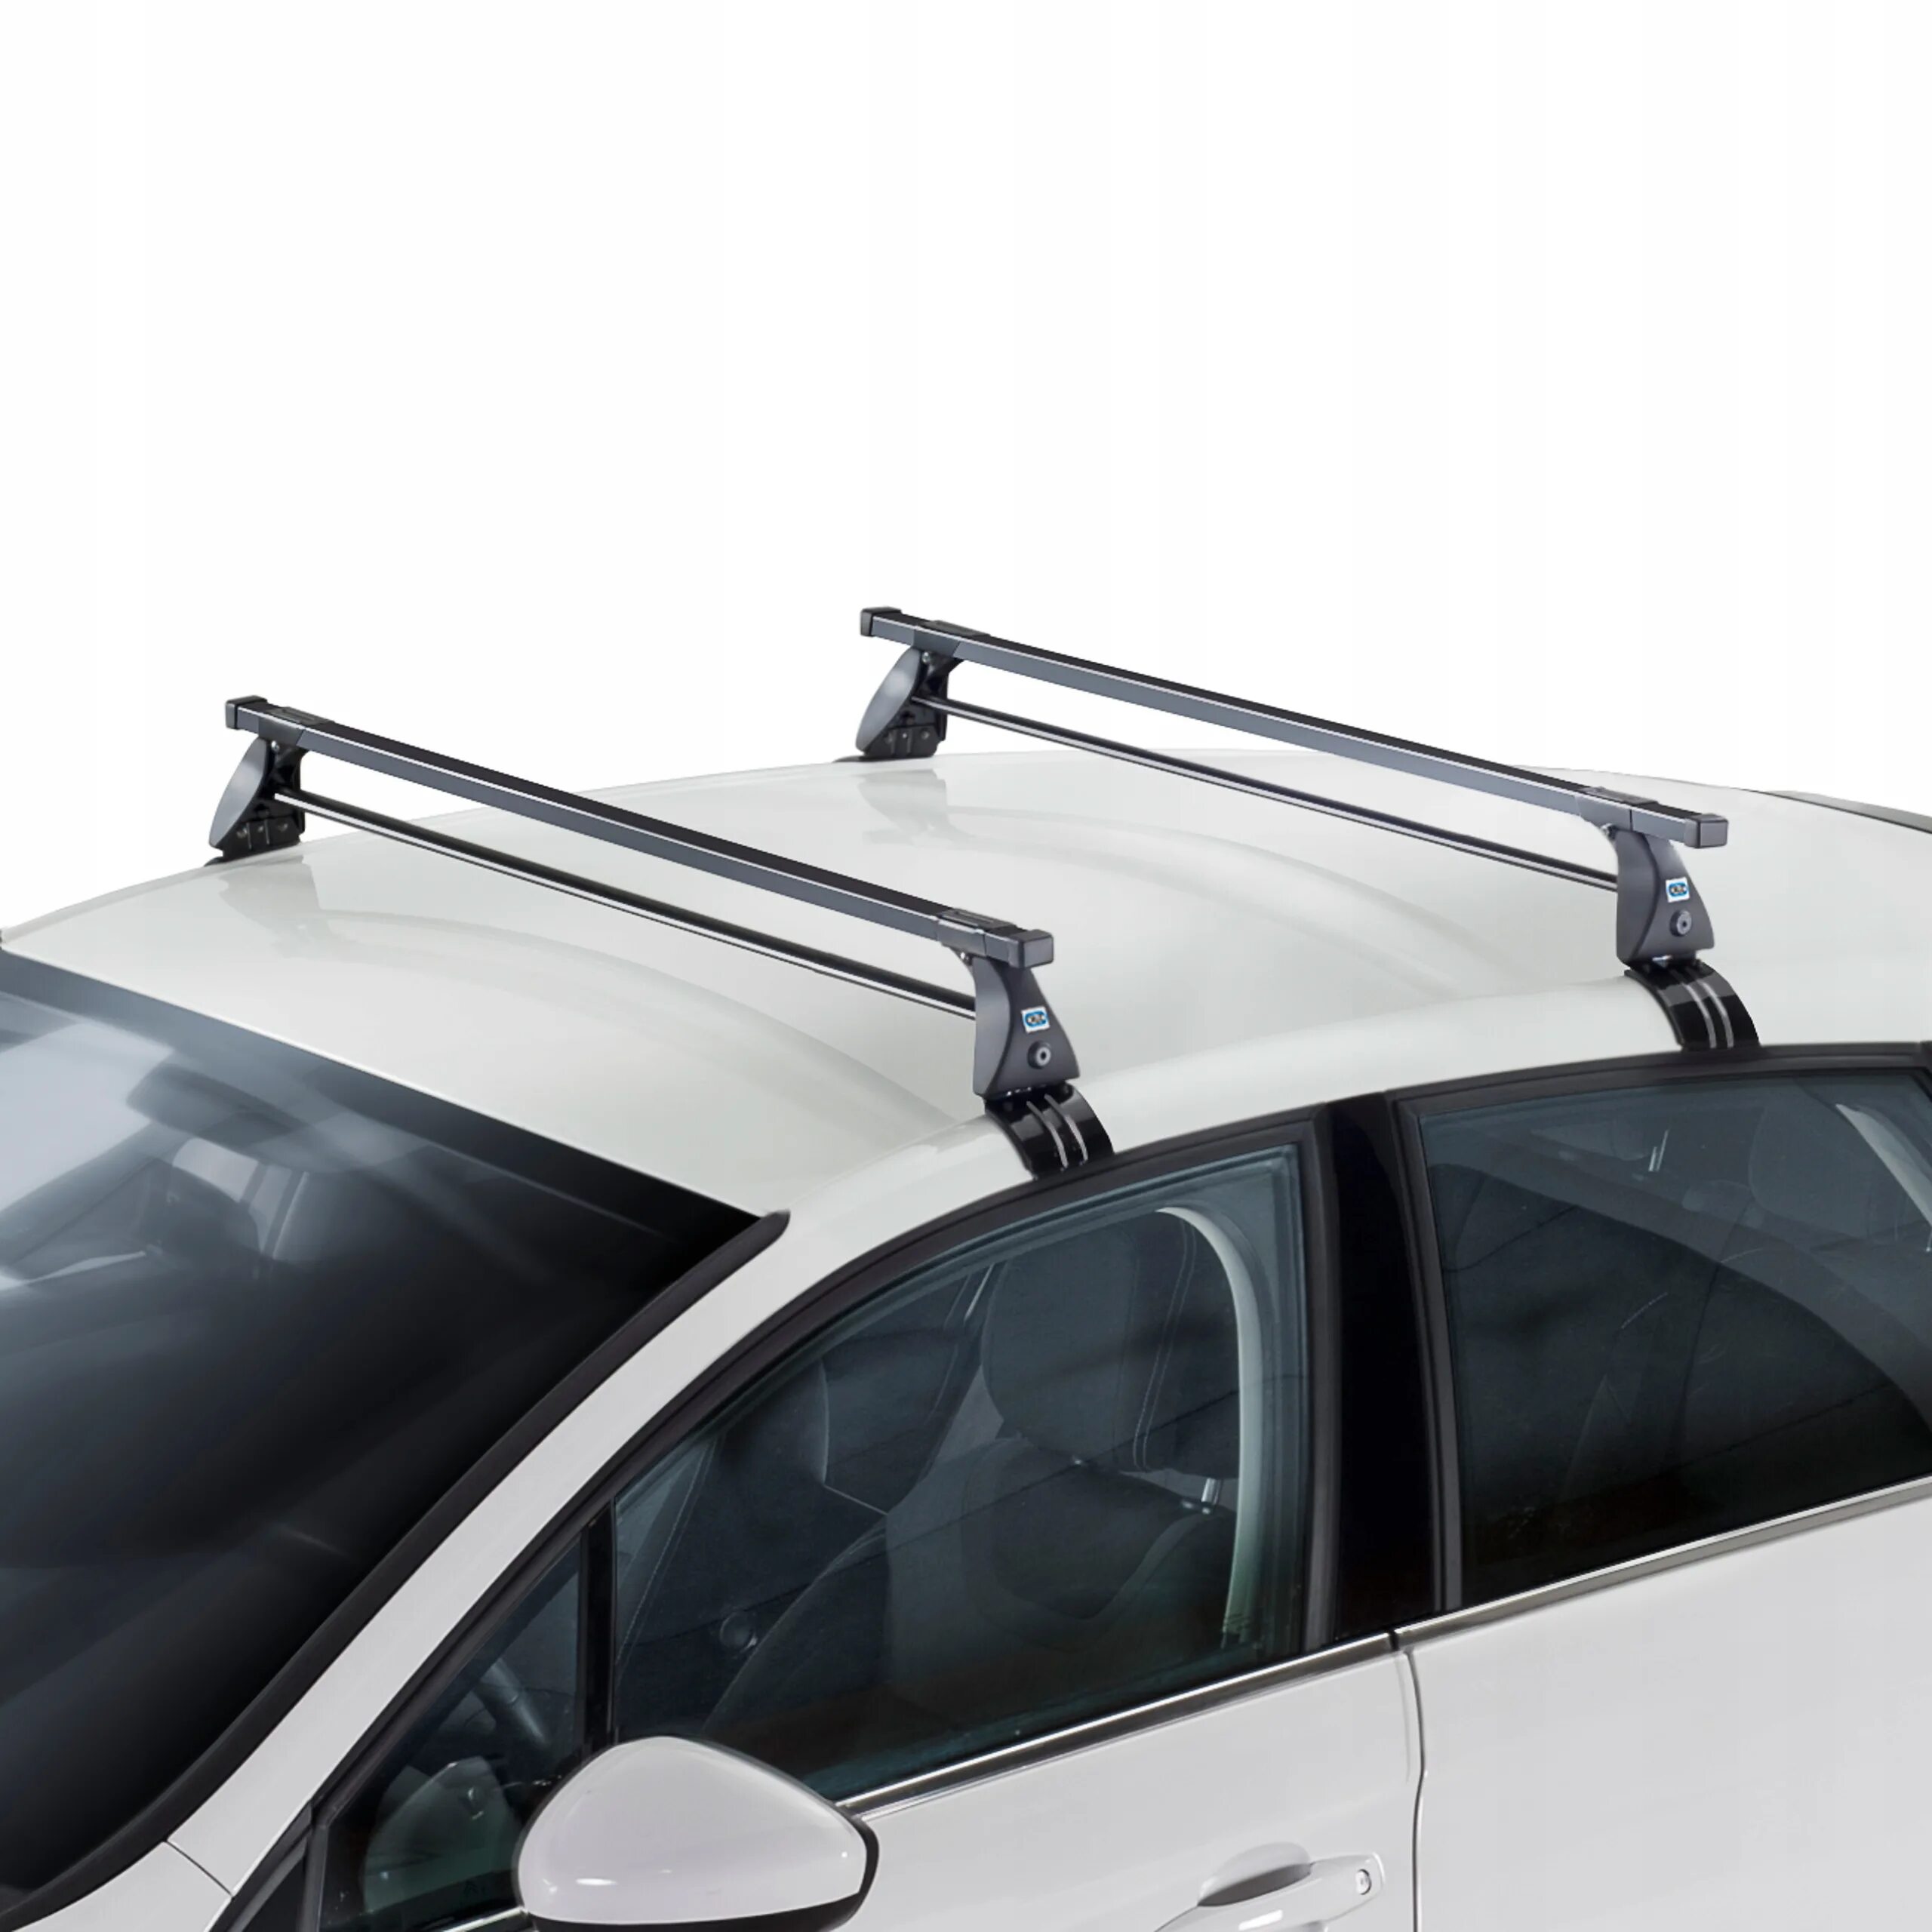 Купить поперечины на крышу. Hyundai i20 багажник на крышу. Багажник Lux стандарт на крышу Seat Ibiza (2002-2008), 1.1 м. Багажник на крышу Rack l 54. Thule багажник EVO для крыши алюминий.